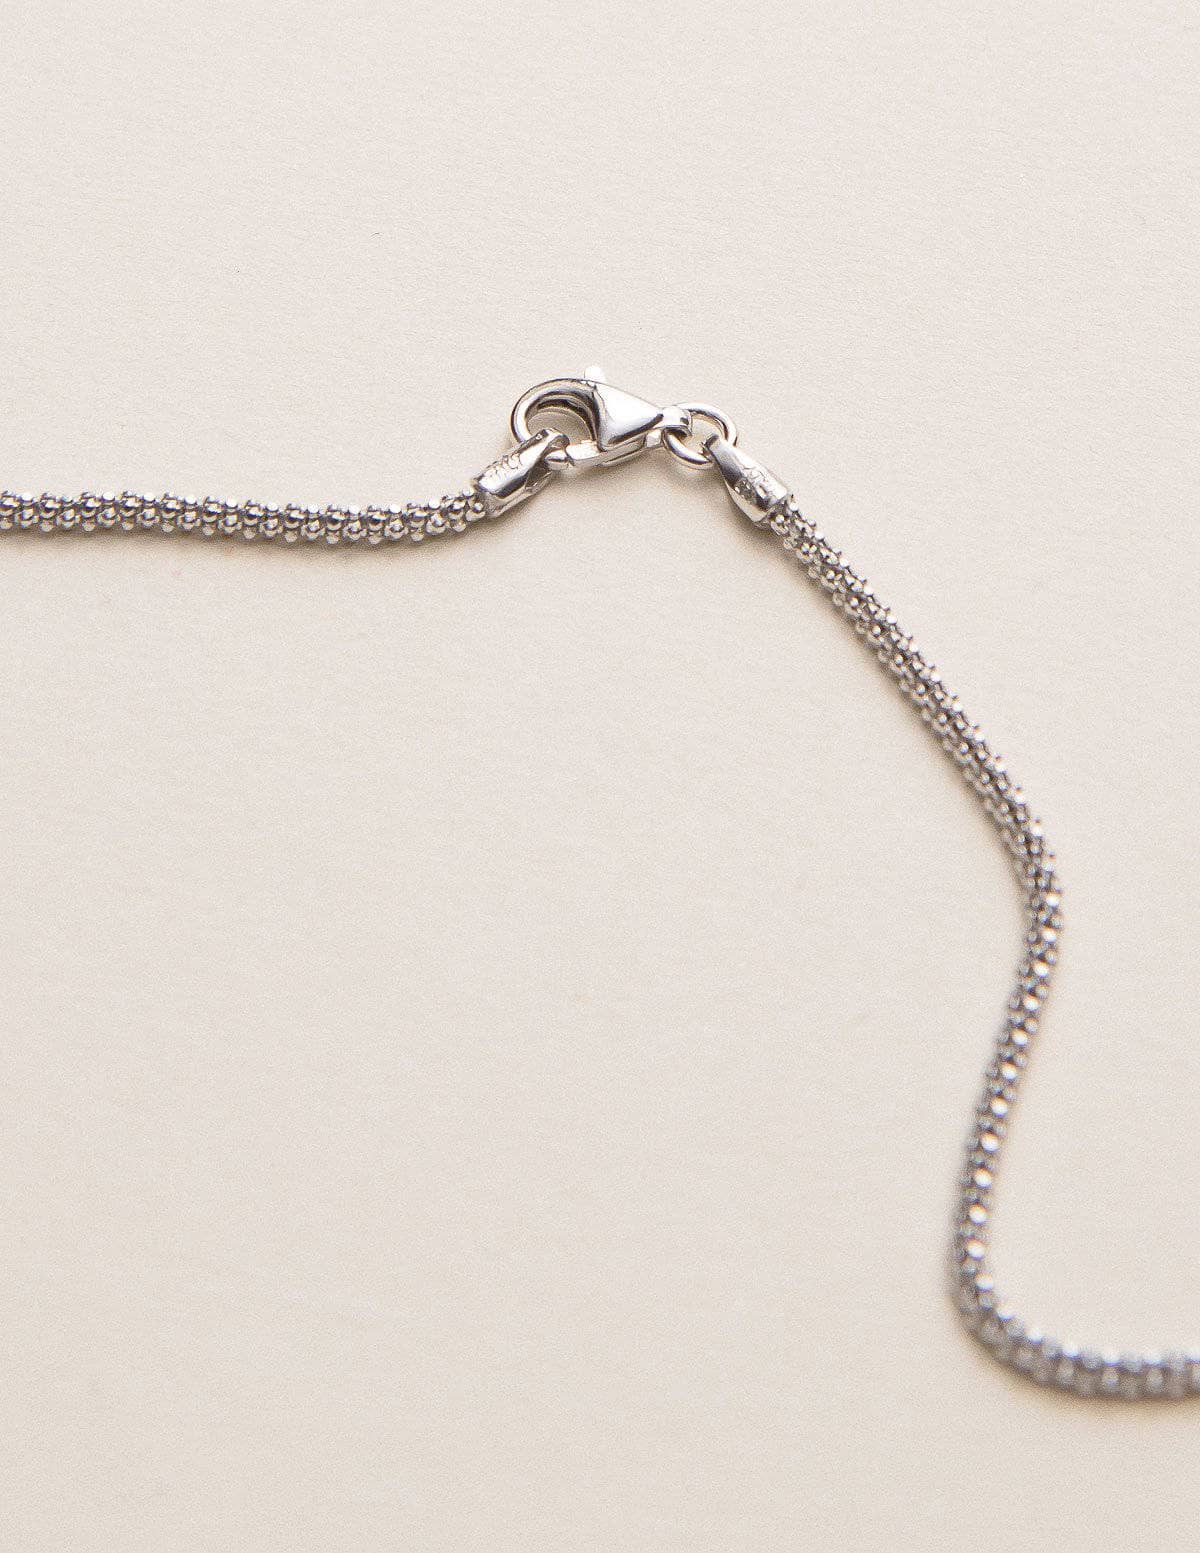 Herkimer Quartz 'Diamond" Pendant Necklace - One of a Kind